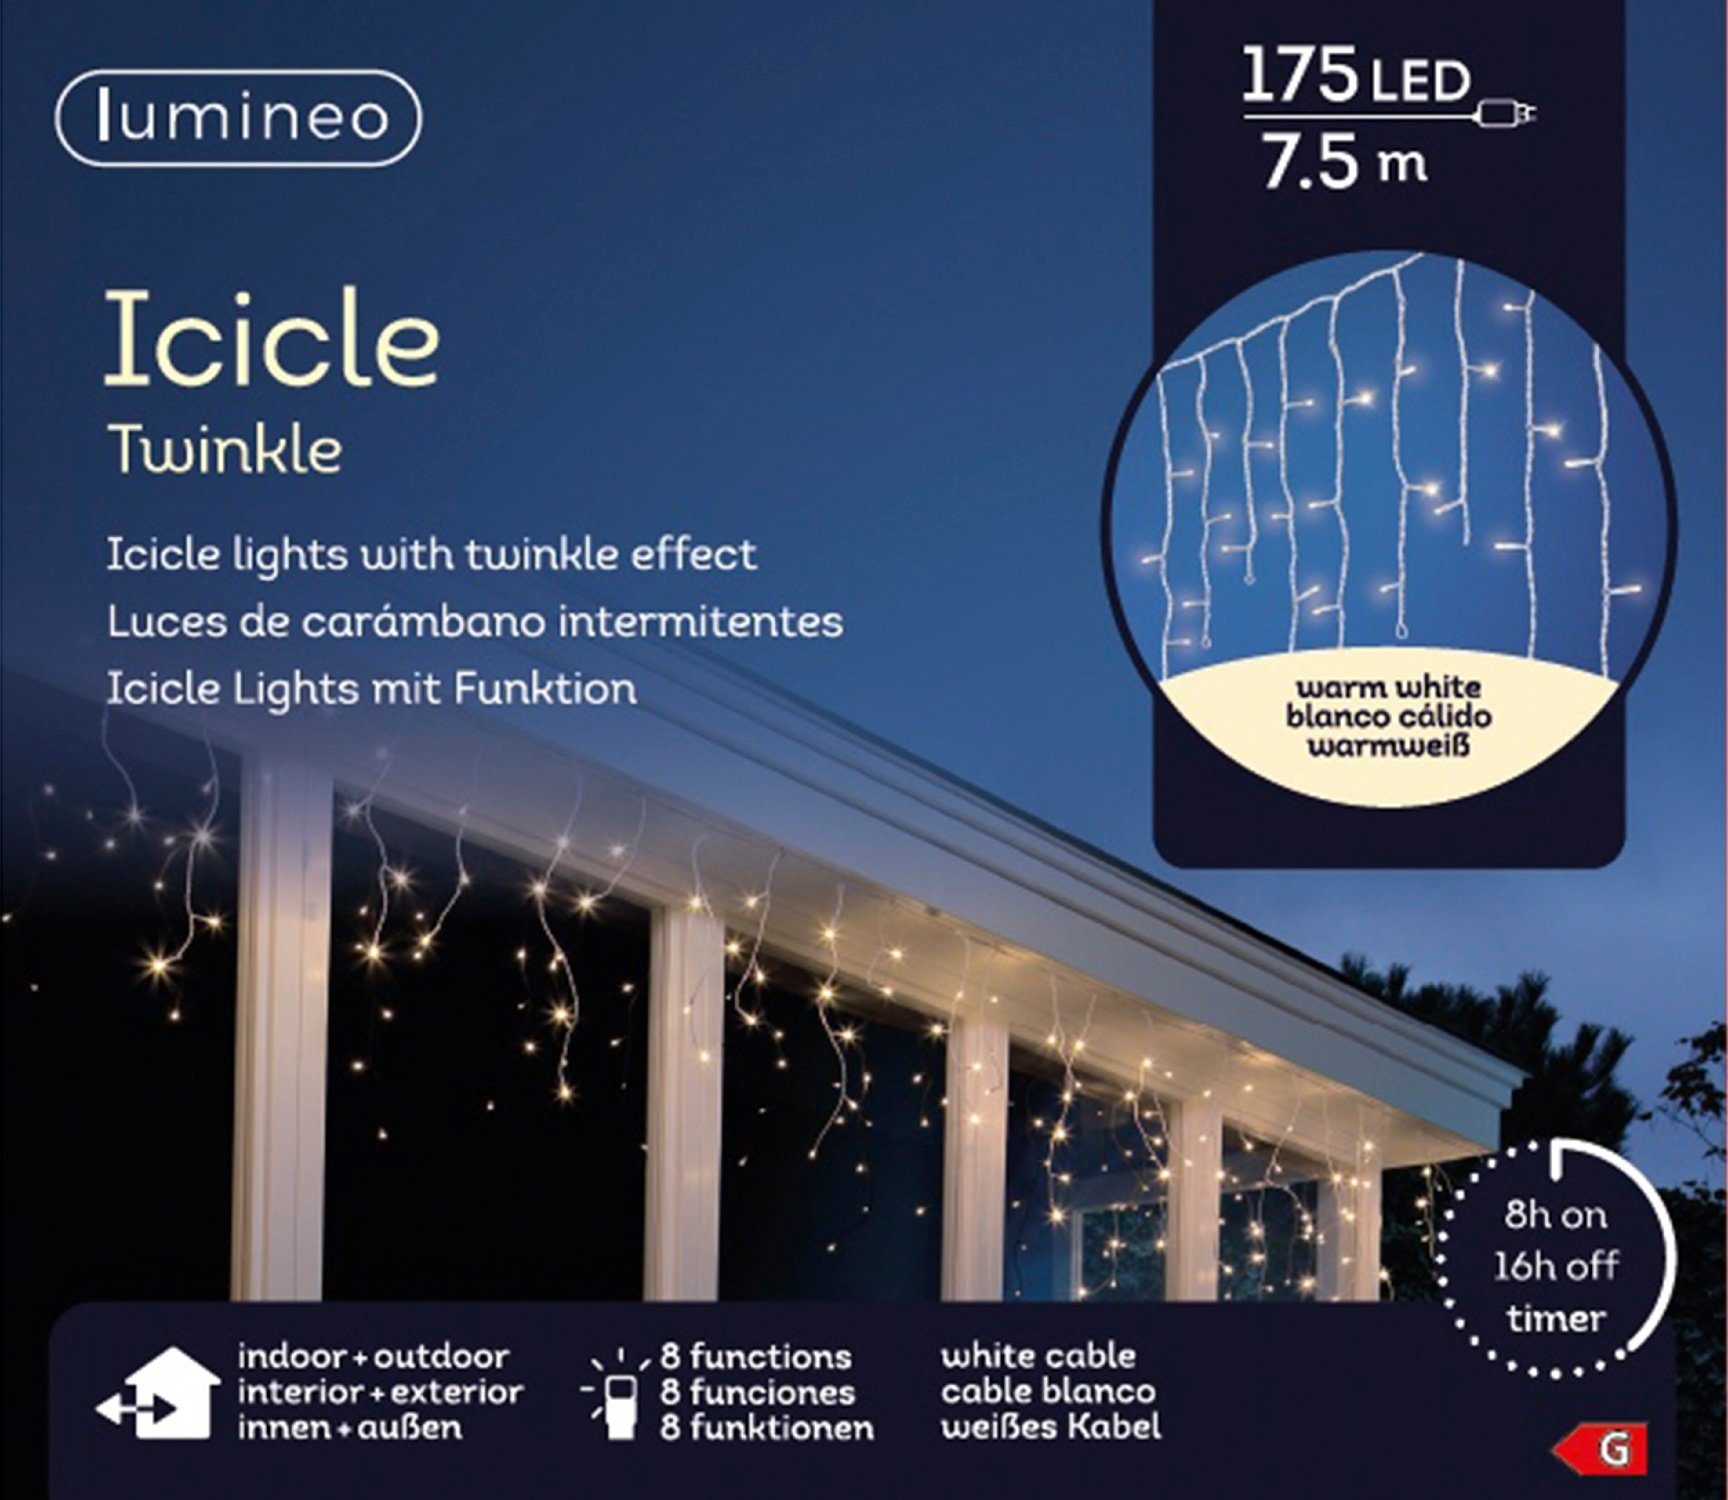 Kaemingk Lumineo LED-Lichterkette Lumineo Lichtervorhang Icicle Twinkle 175 LED 7,5 m warm weiß, weiß, 8 Twinkle-Effekte, Timer, Indoor, Outdoor